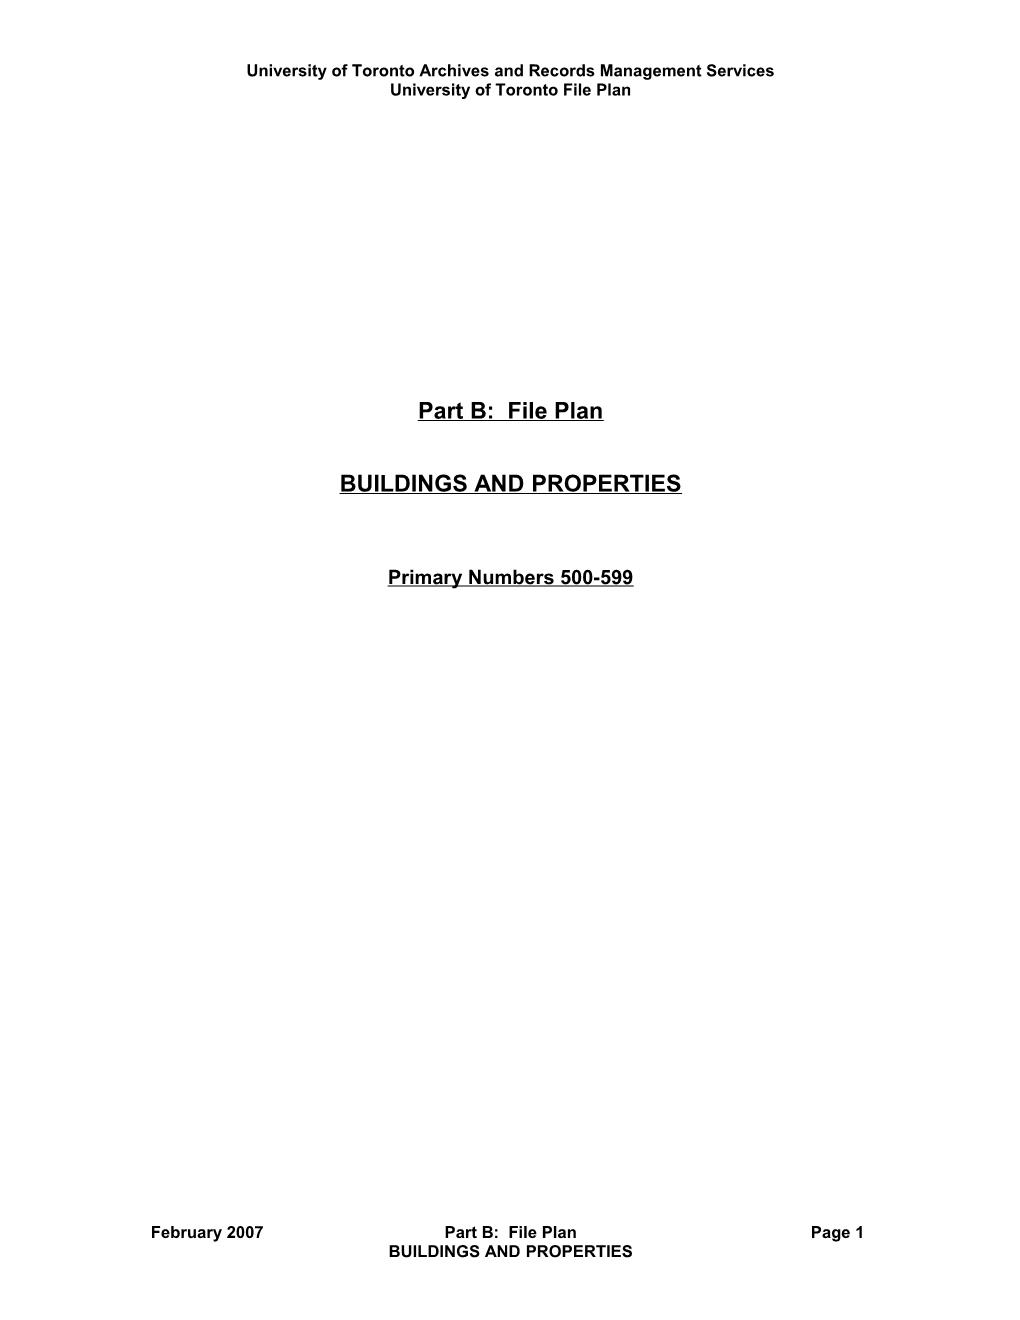 Buildings and Properties Draft File Plan: 500-599